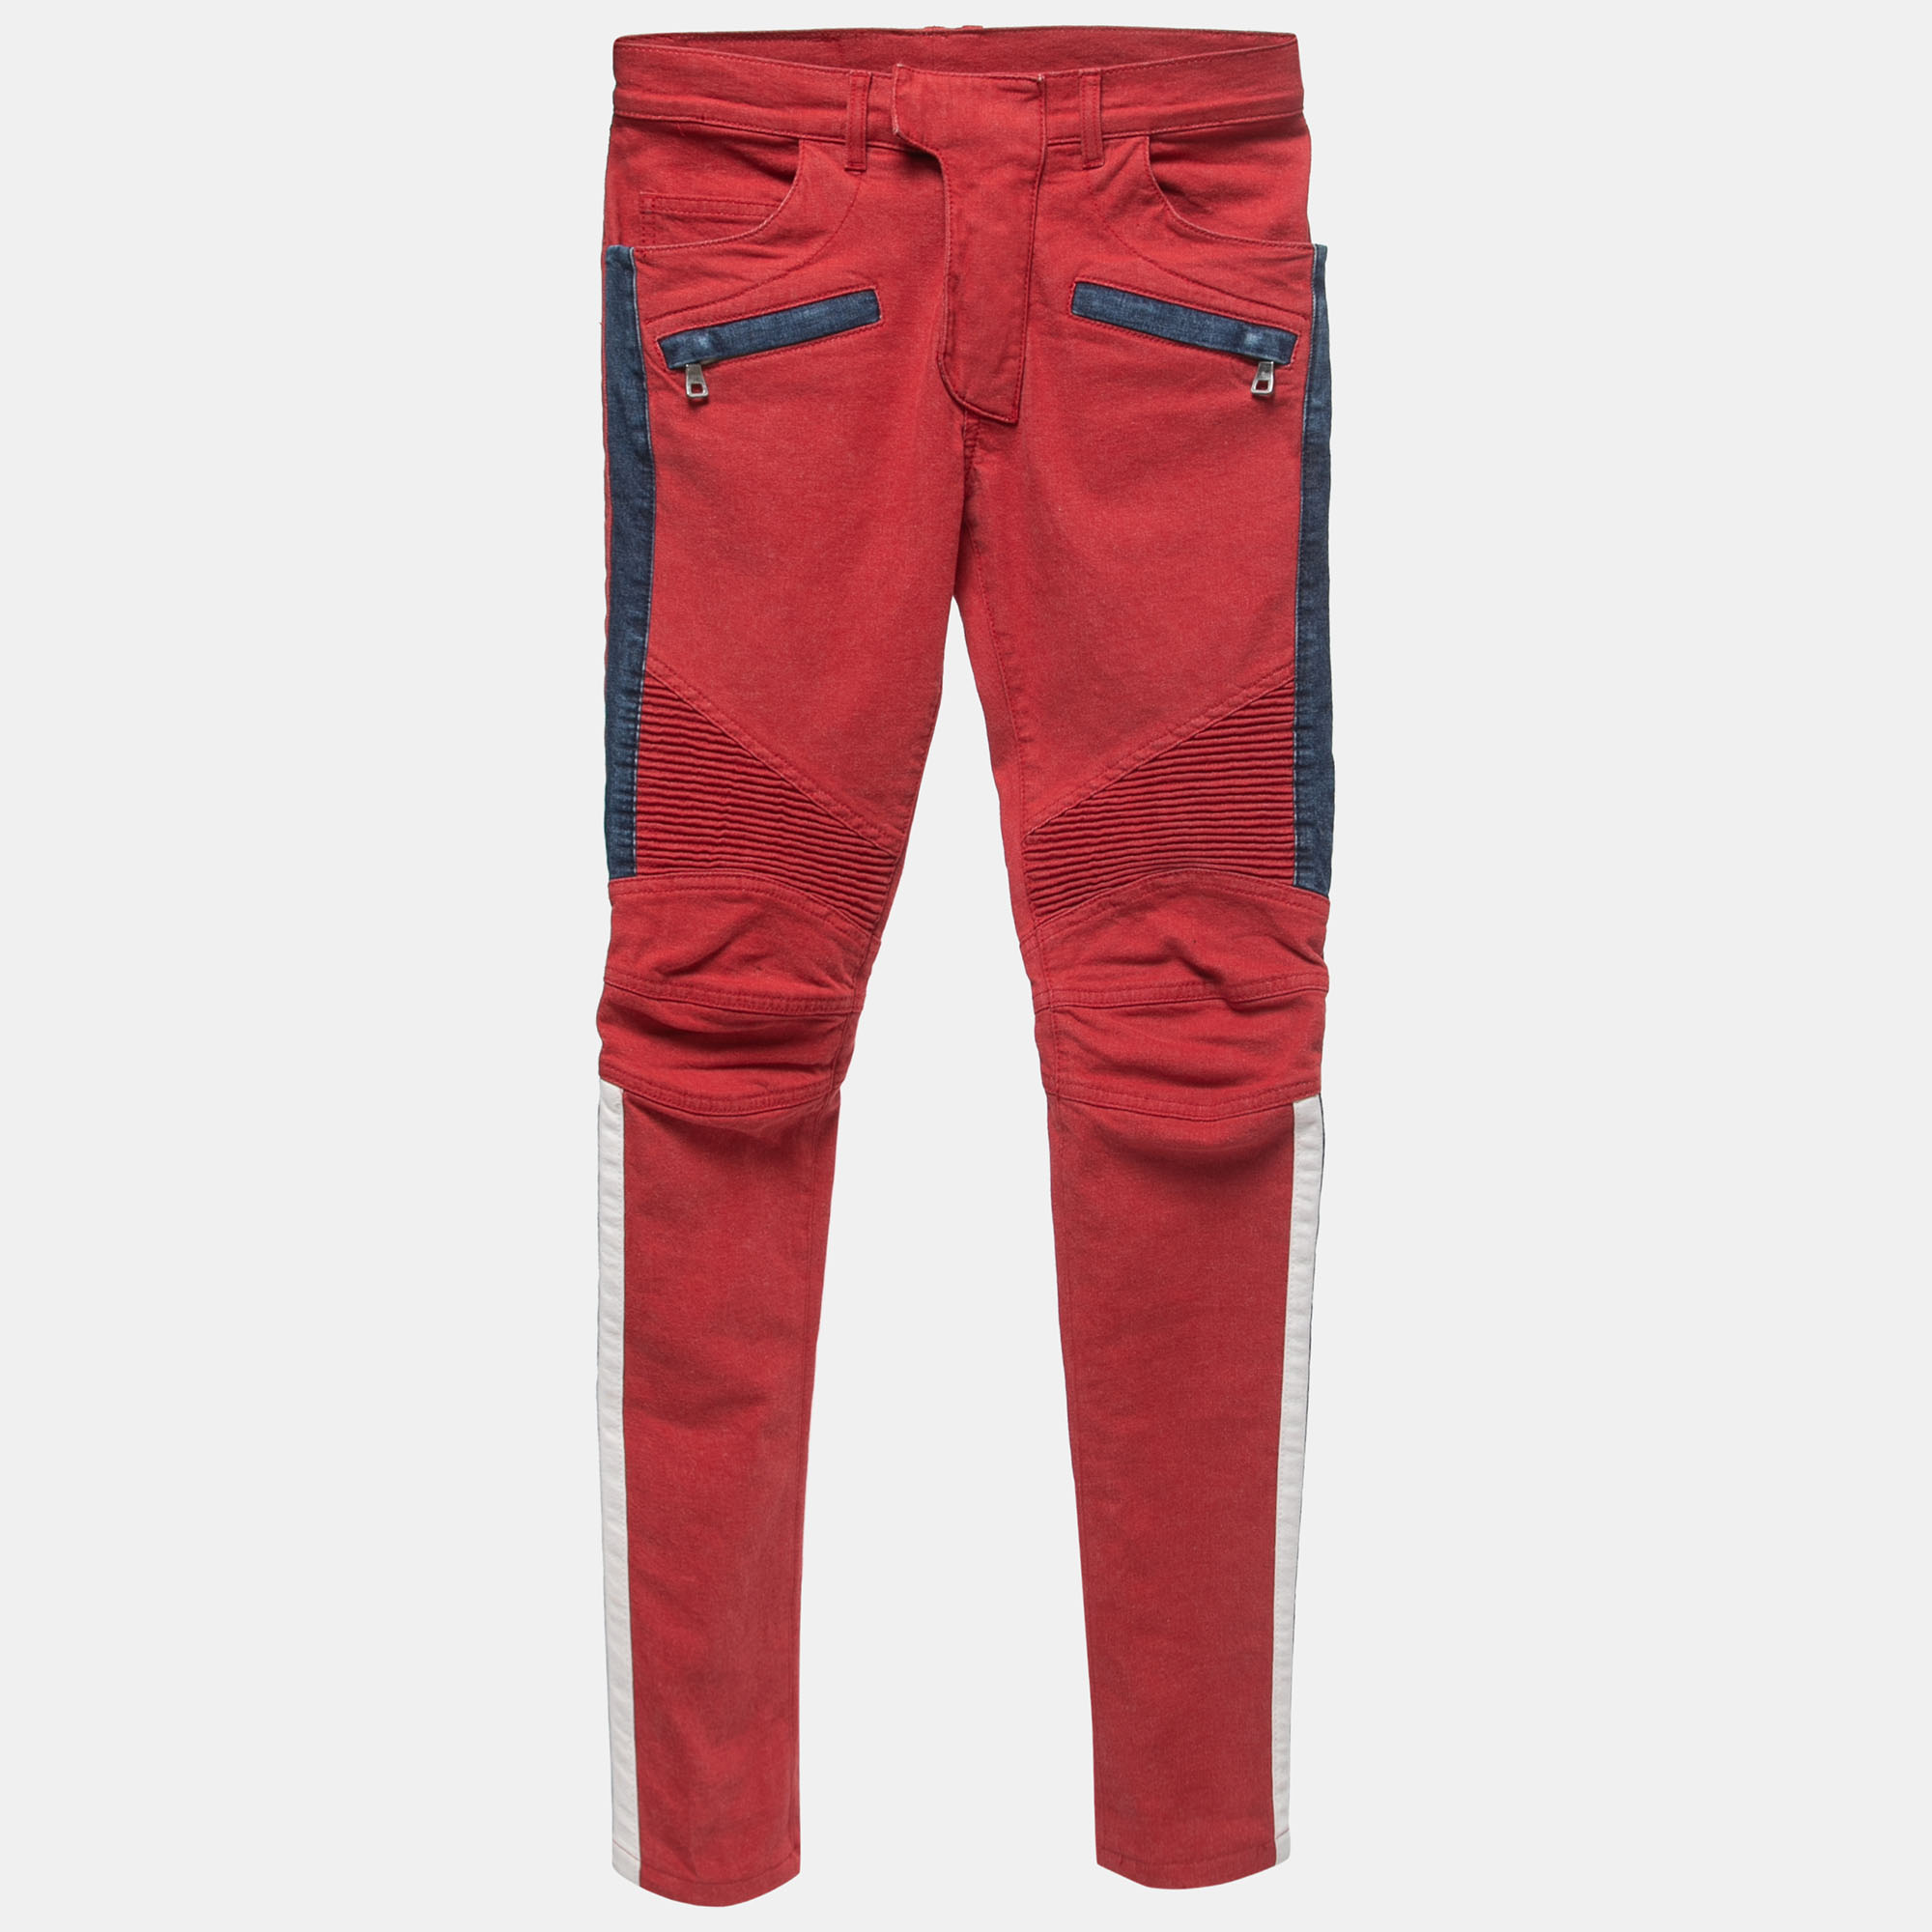 Balmain Red Denim Quilted Skinny Jeans M Waist 27